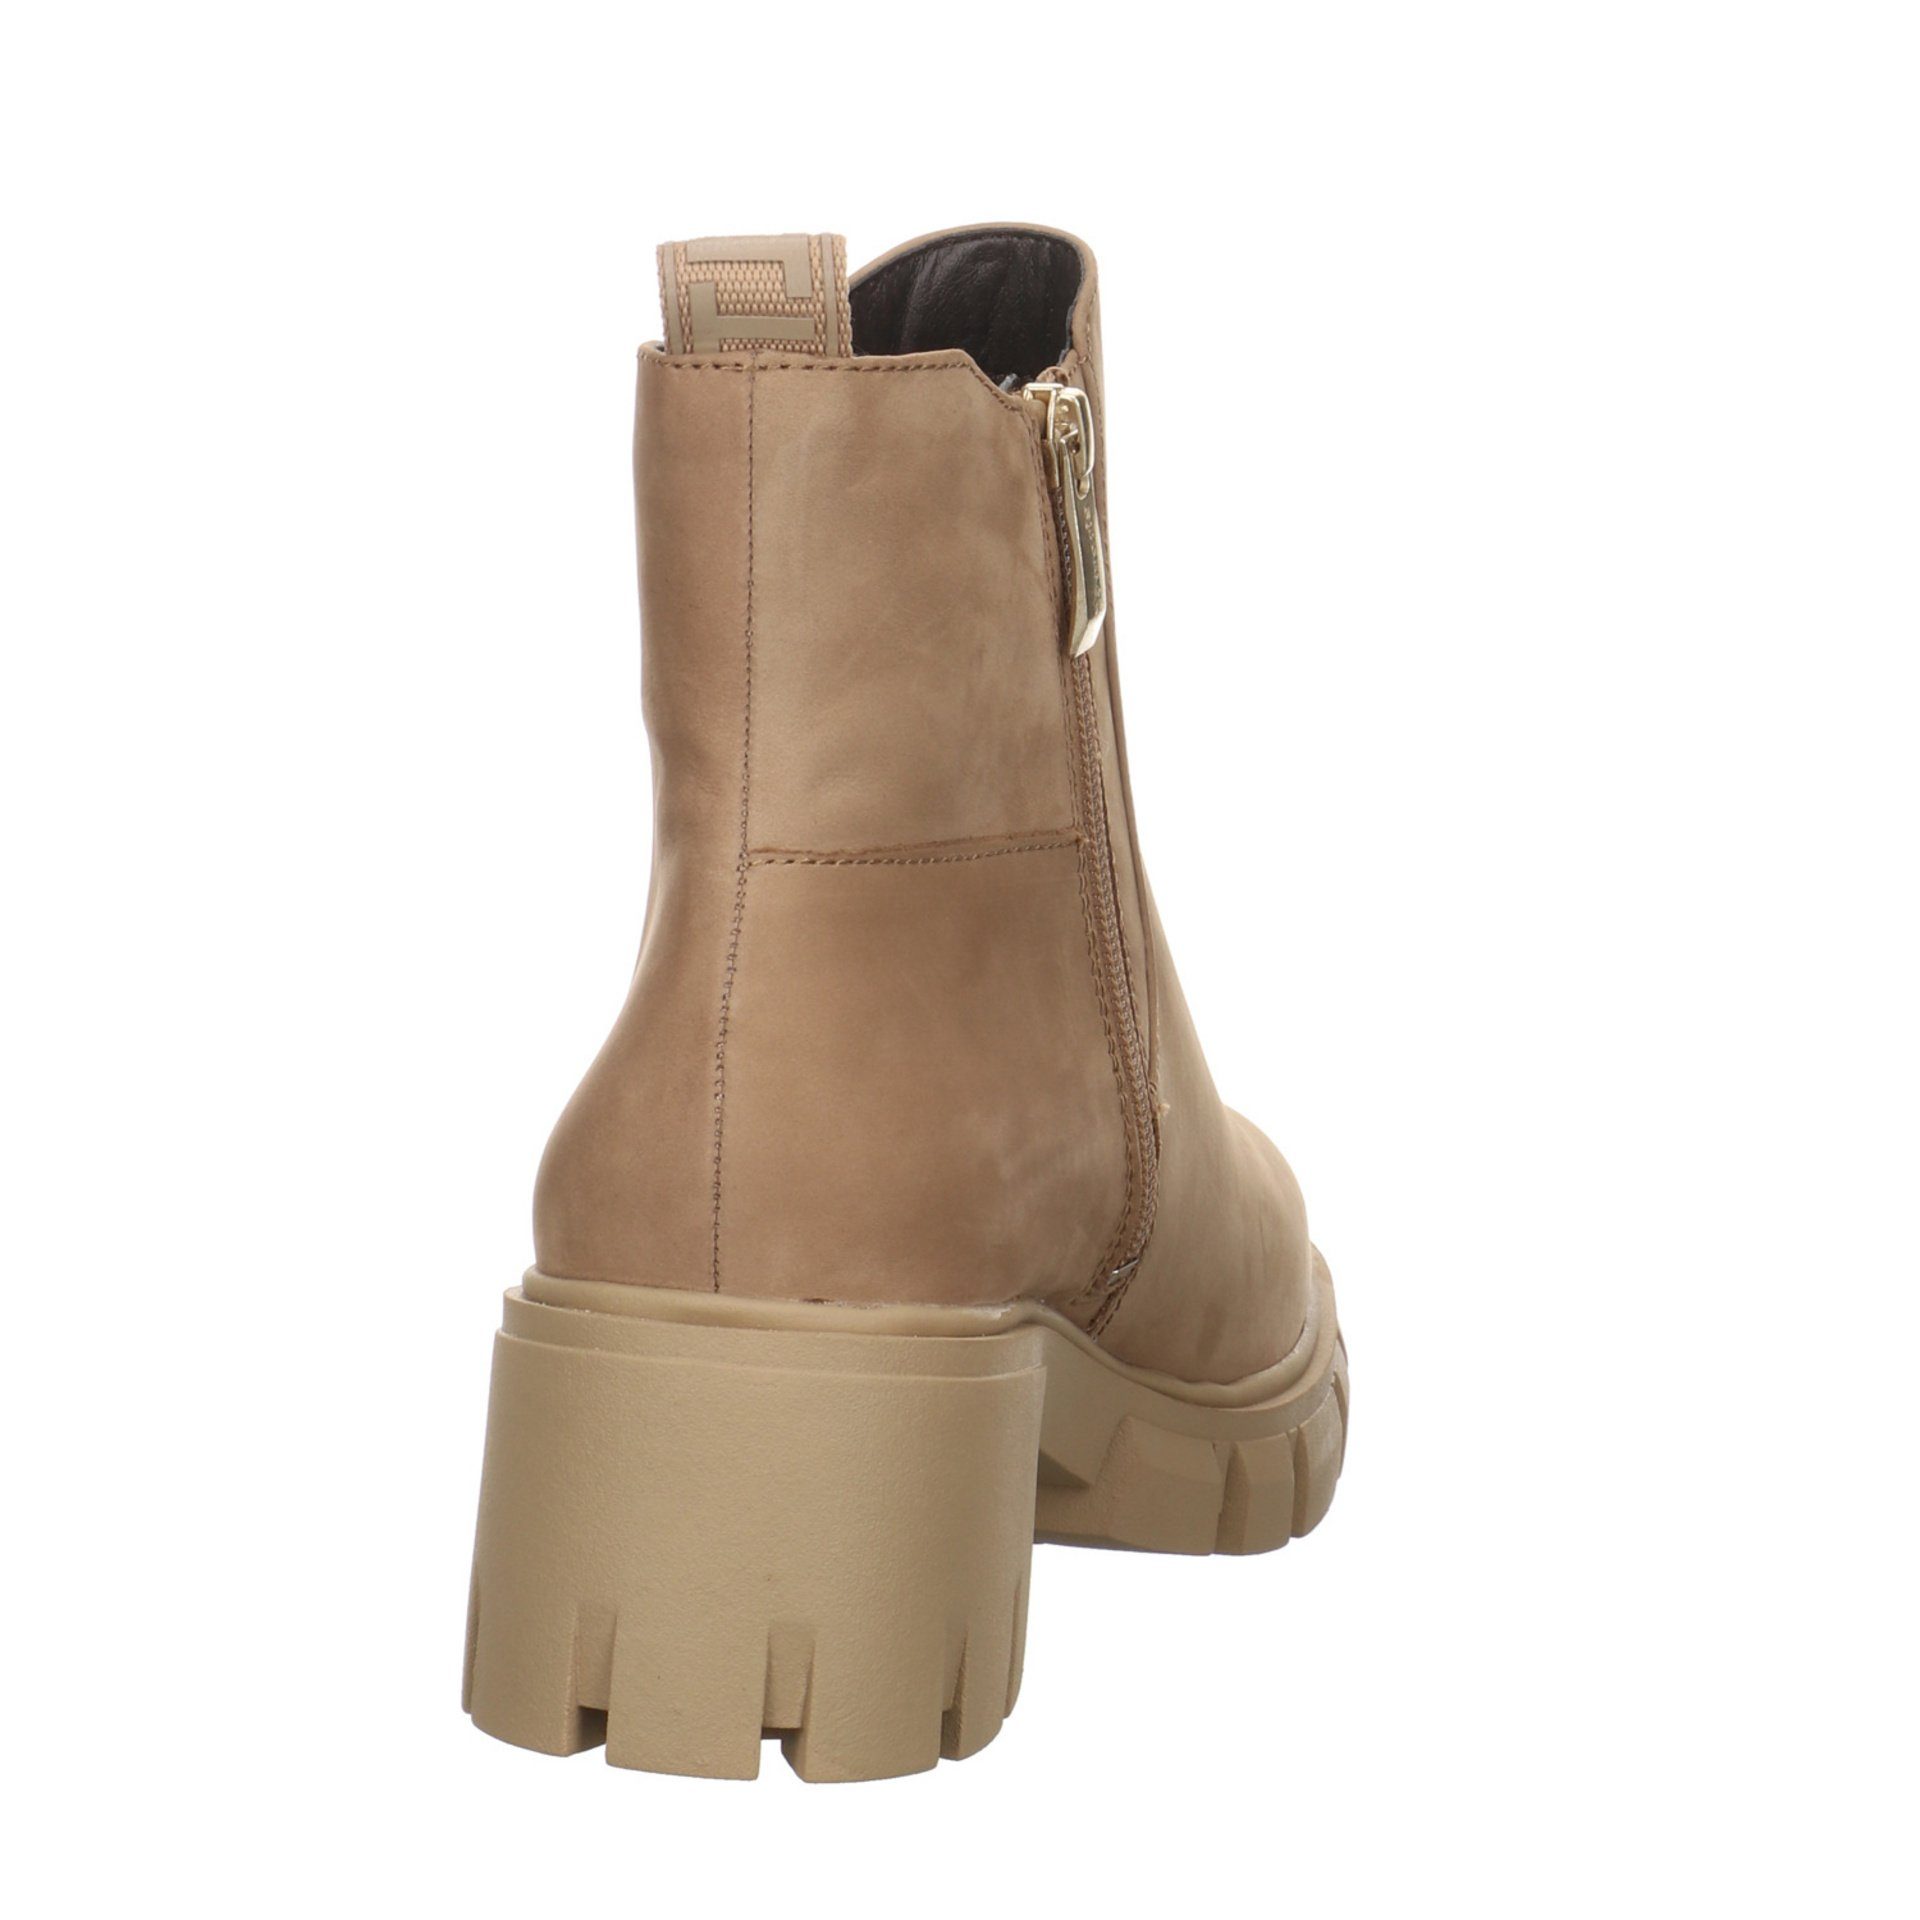 (21203969) Schuhe Boots Stiefelette Leder-/Textilkombination Tamaris Beige Chelsea Damen Stiefeletten